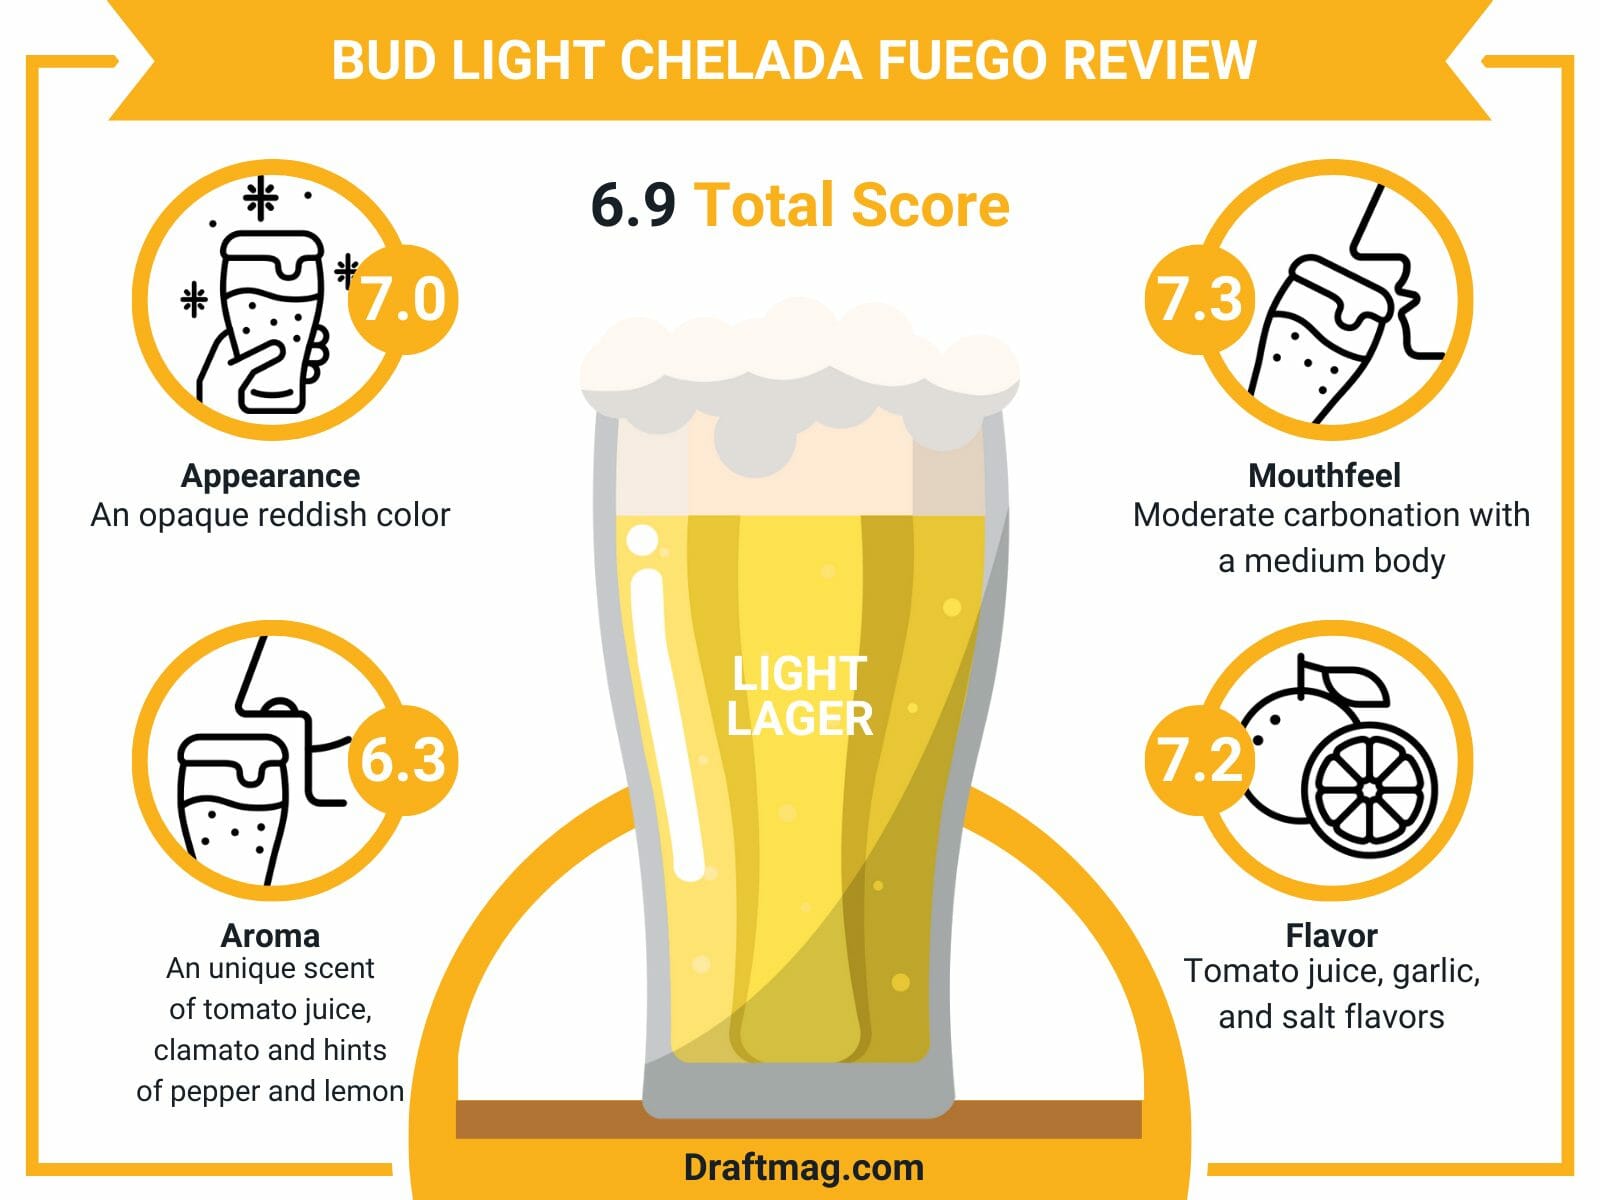 Chelada Fuego Review Infographic